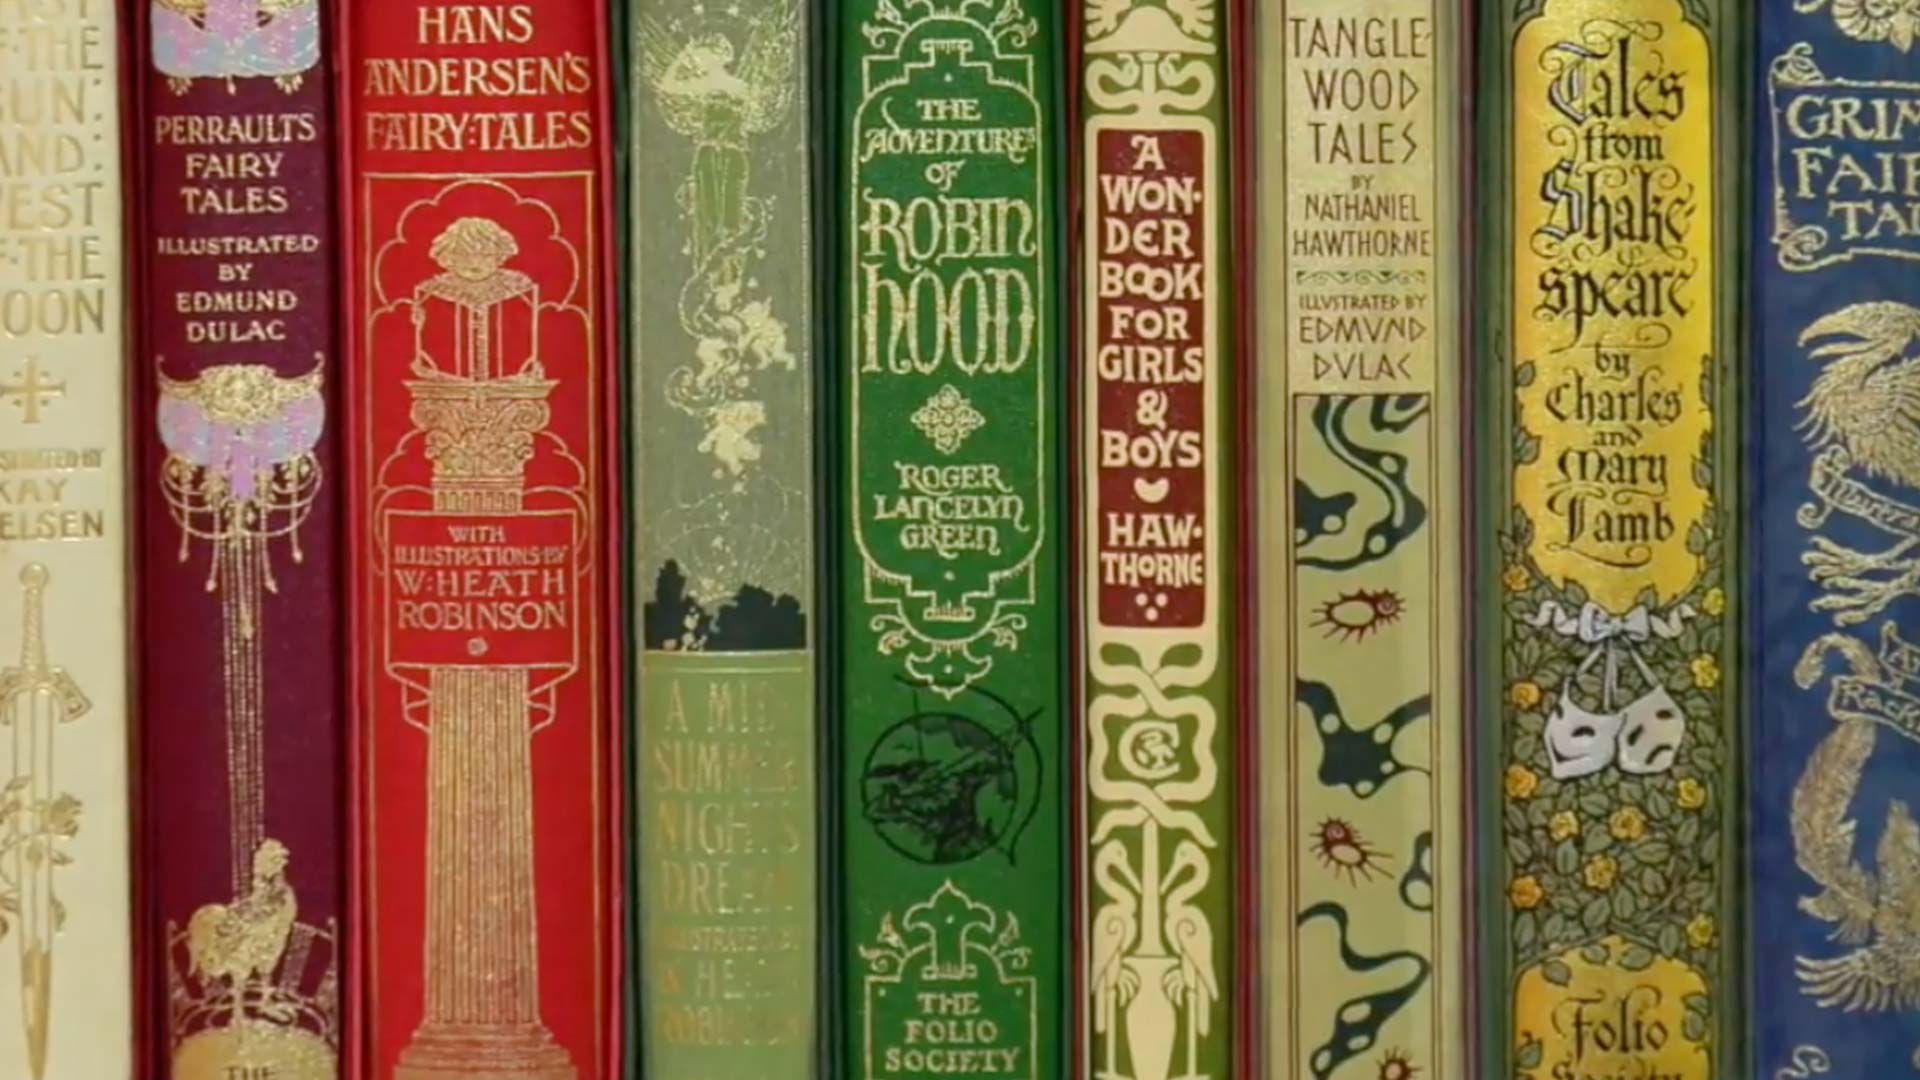 Illustrated Hardcover Fiction Books & Novels, The Folio Society